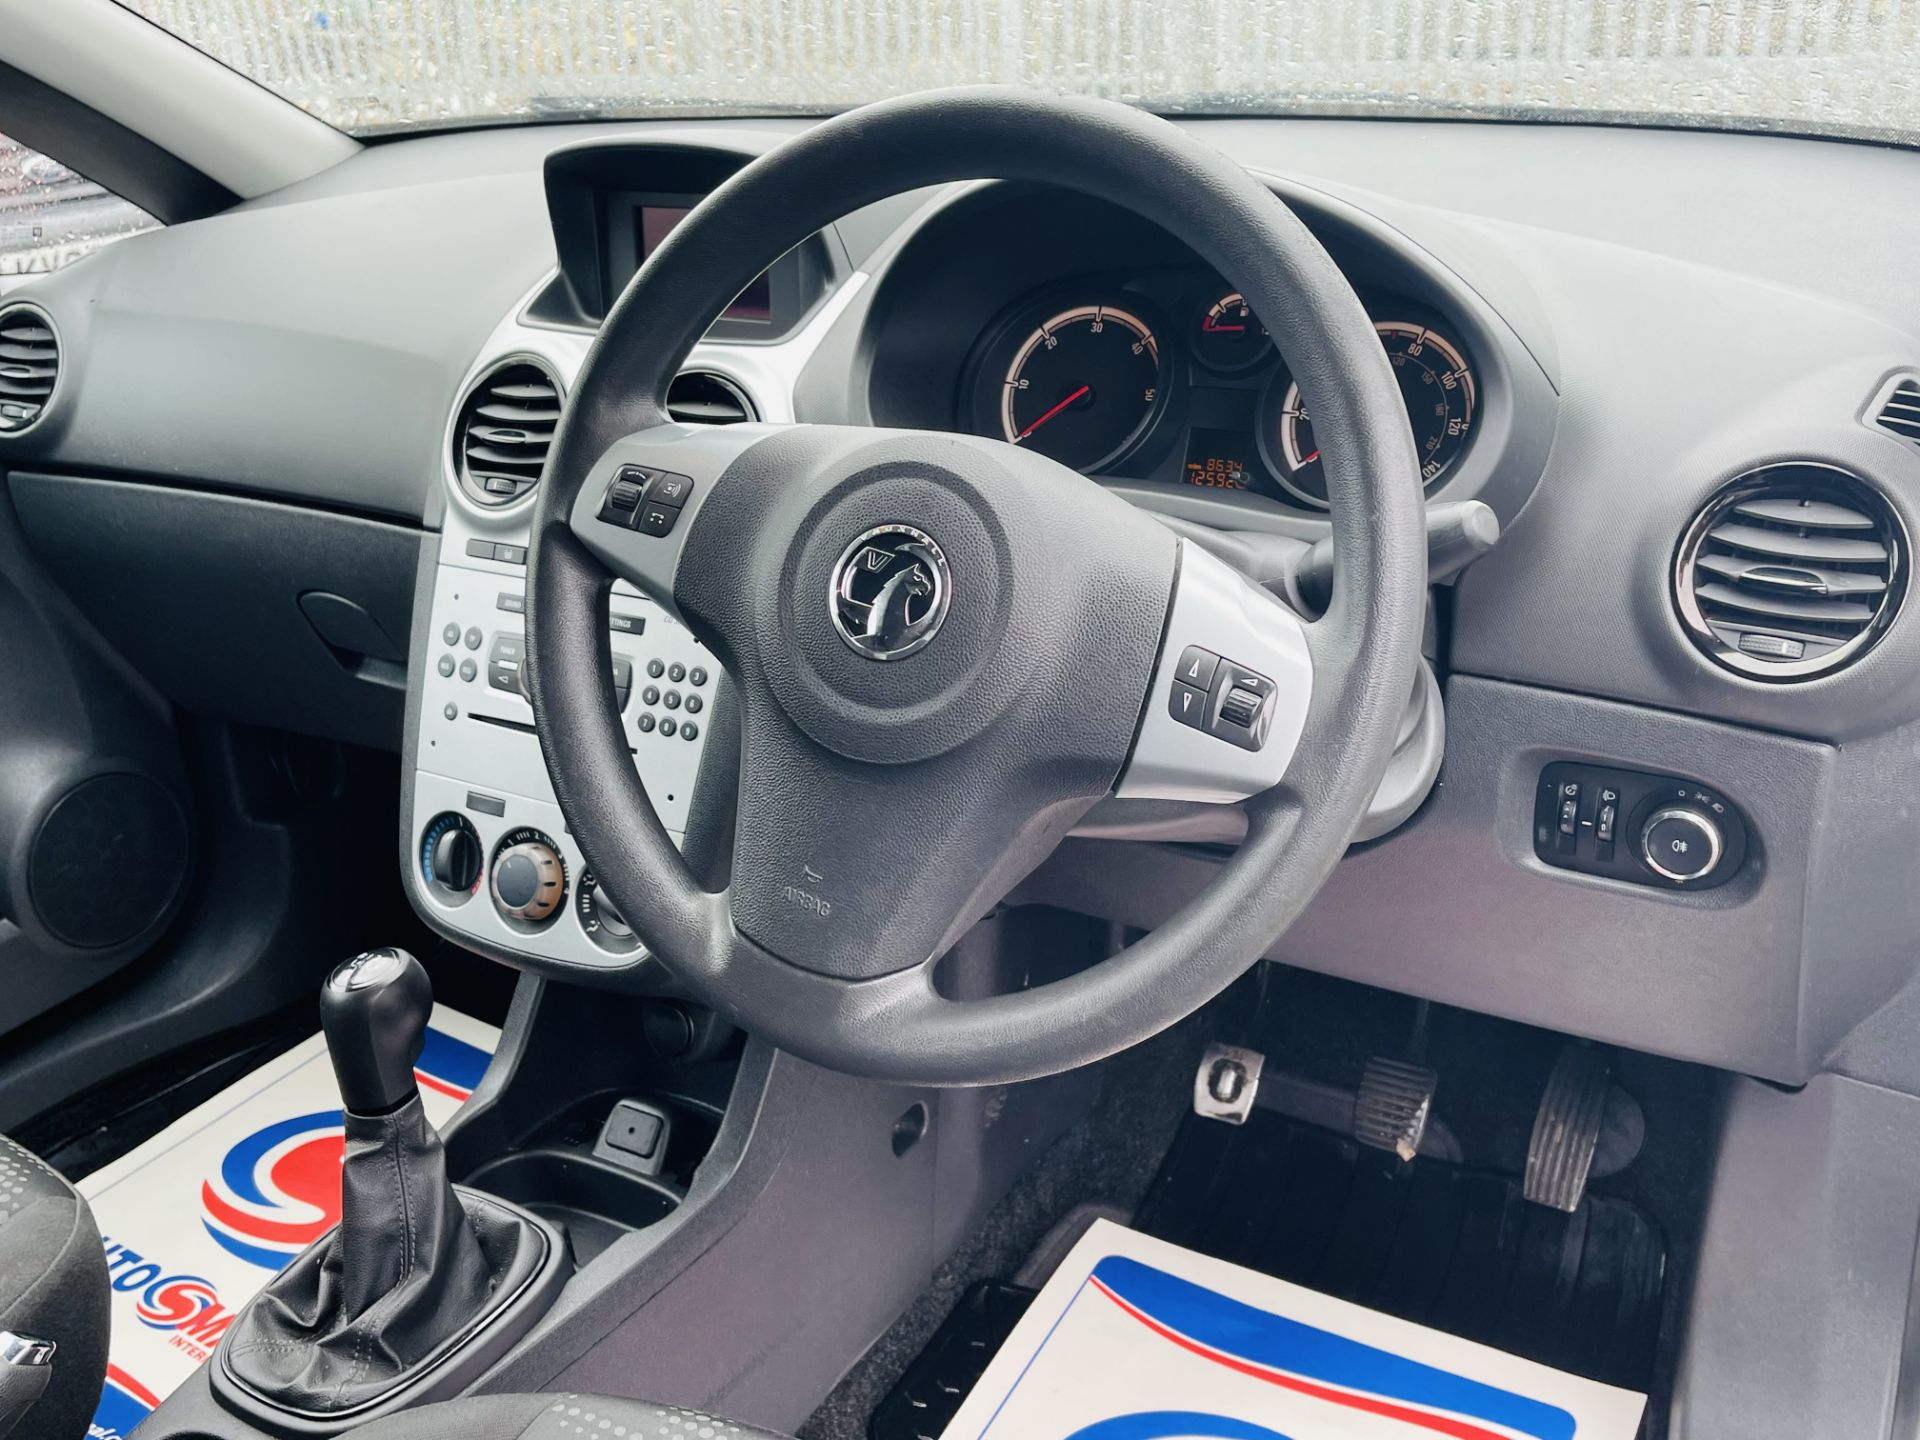 Vauxhall Corsa 1.2 CDTI Eco-Flex 2015 '15 Reg' - LCV - No Vat Save 20% - Image 15 of 17